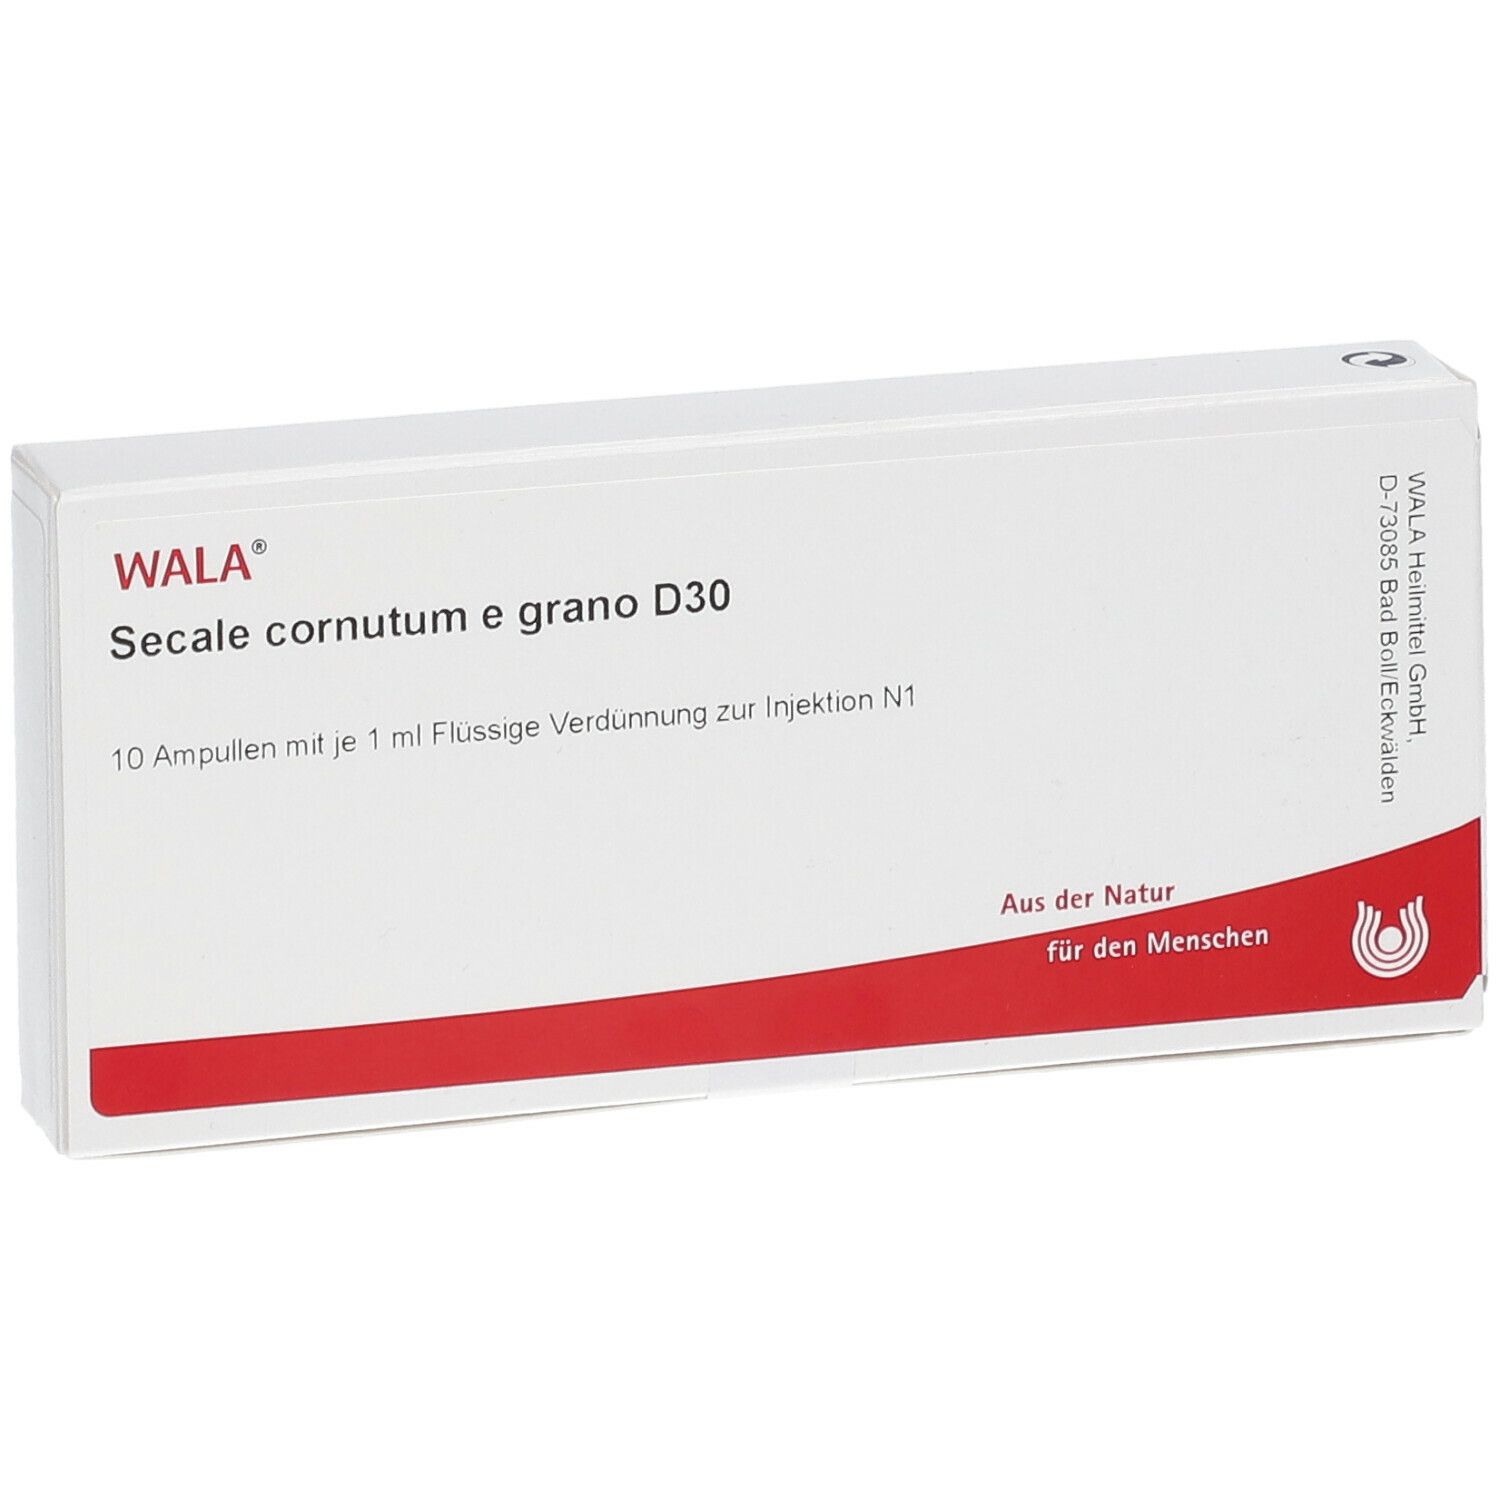 WALA® Secale cornutum e grano D 30